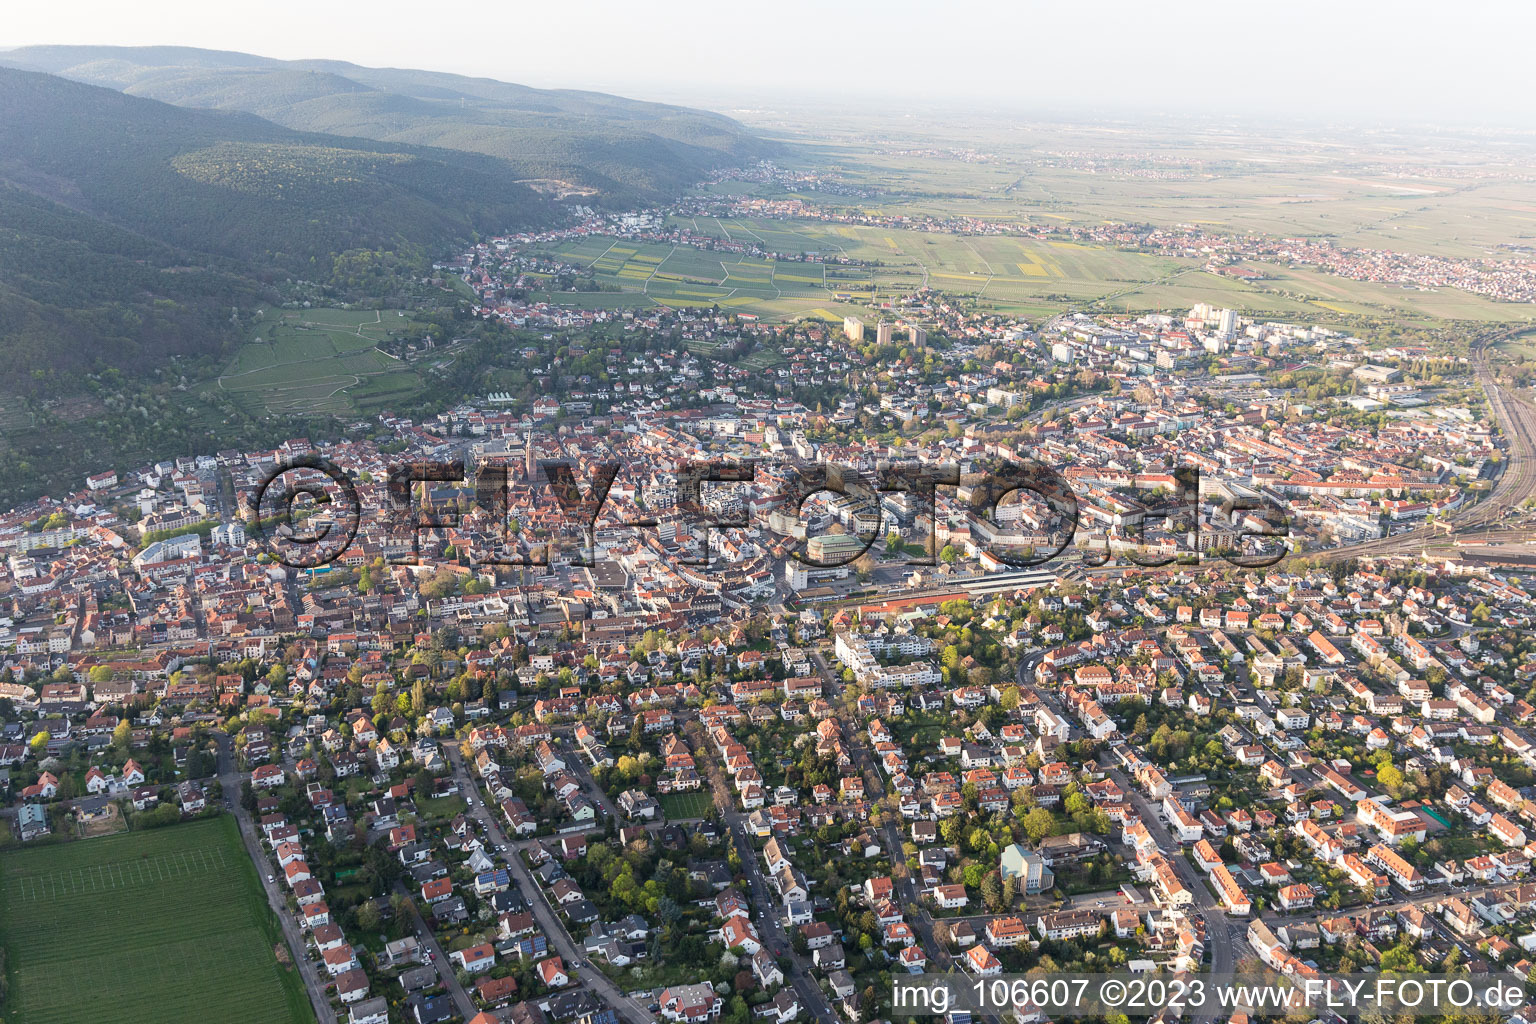 Aerial view of Neustadt an der Weinstraße in the state Rhineland-Palatinate, Germany